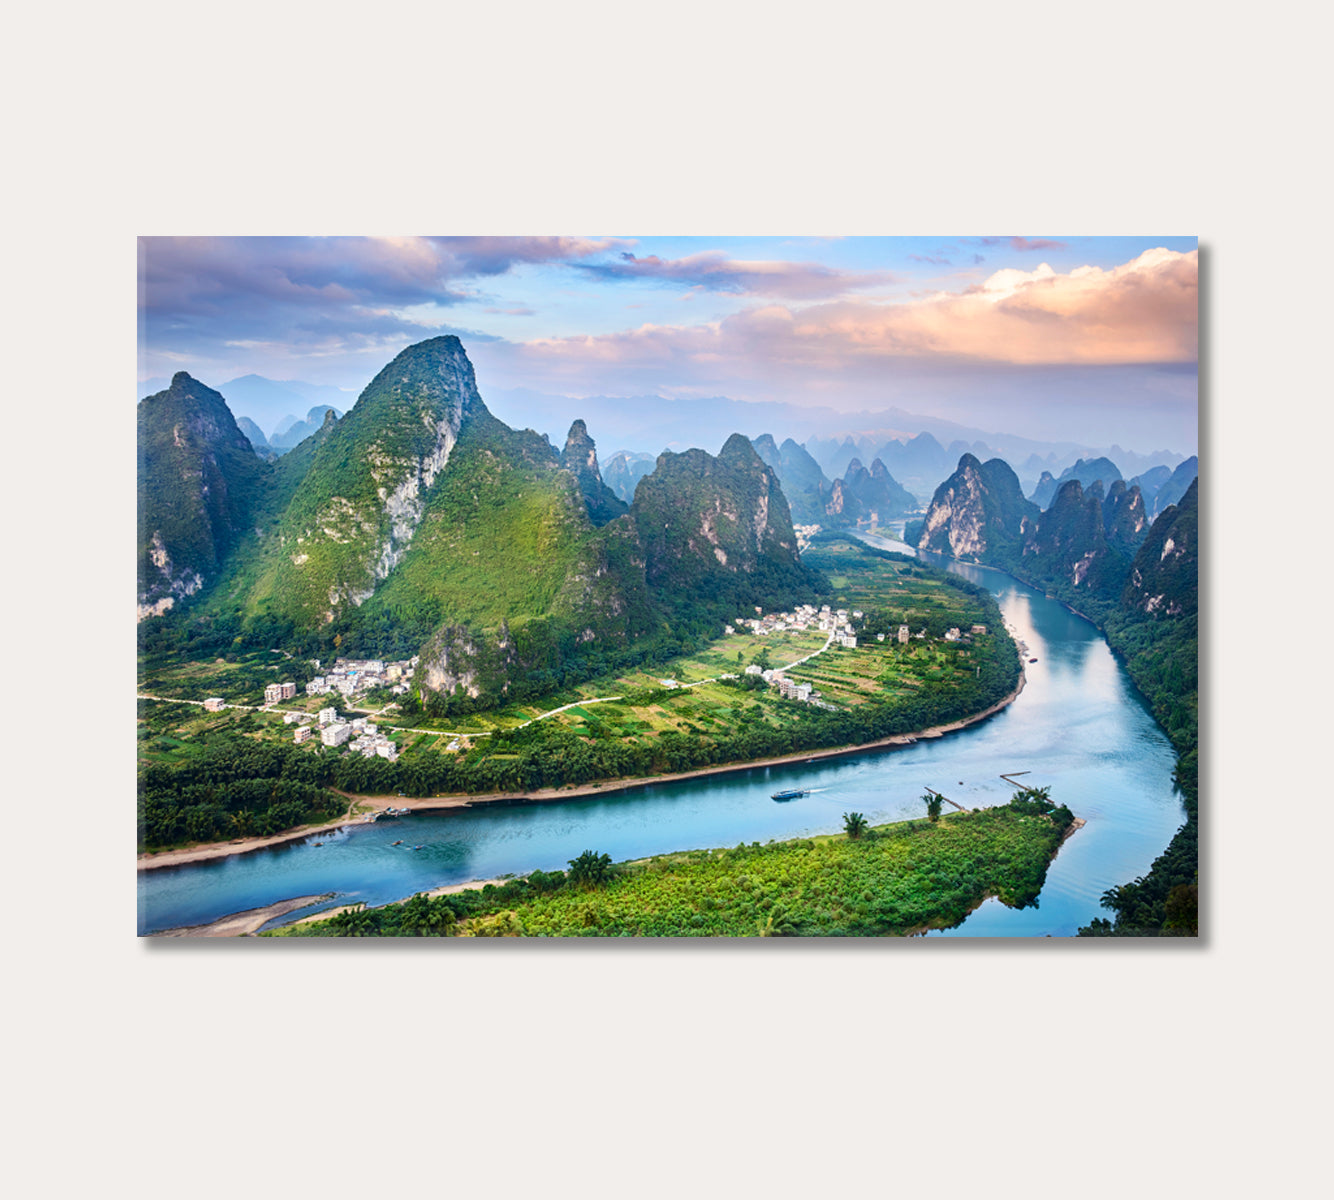 Landscape Li River and Karst Mountains China Canvas Print-Canvas Print-CetArt-1 Panel-24x16 inches-CetArt